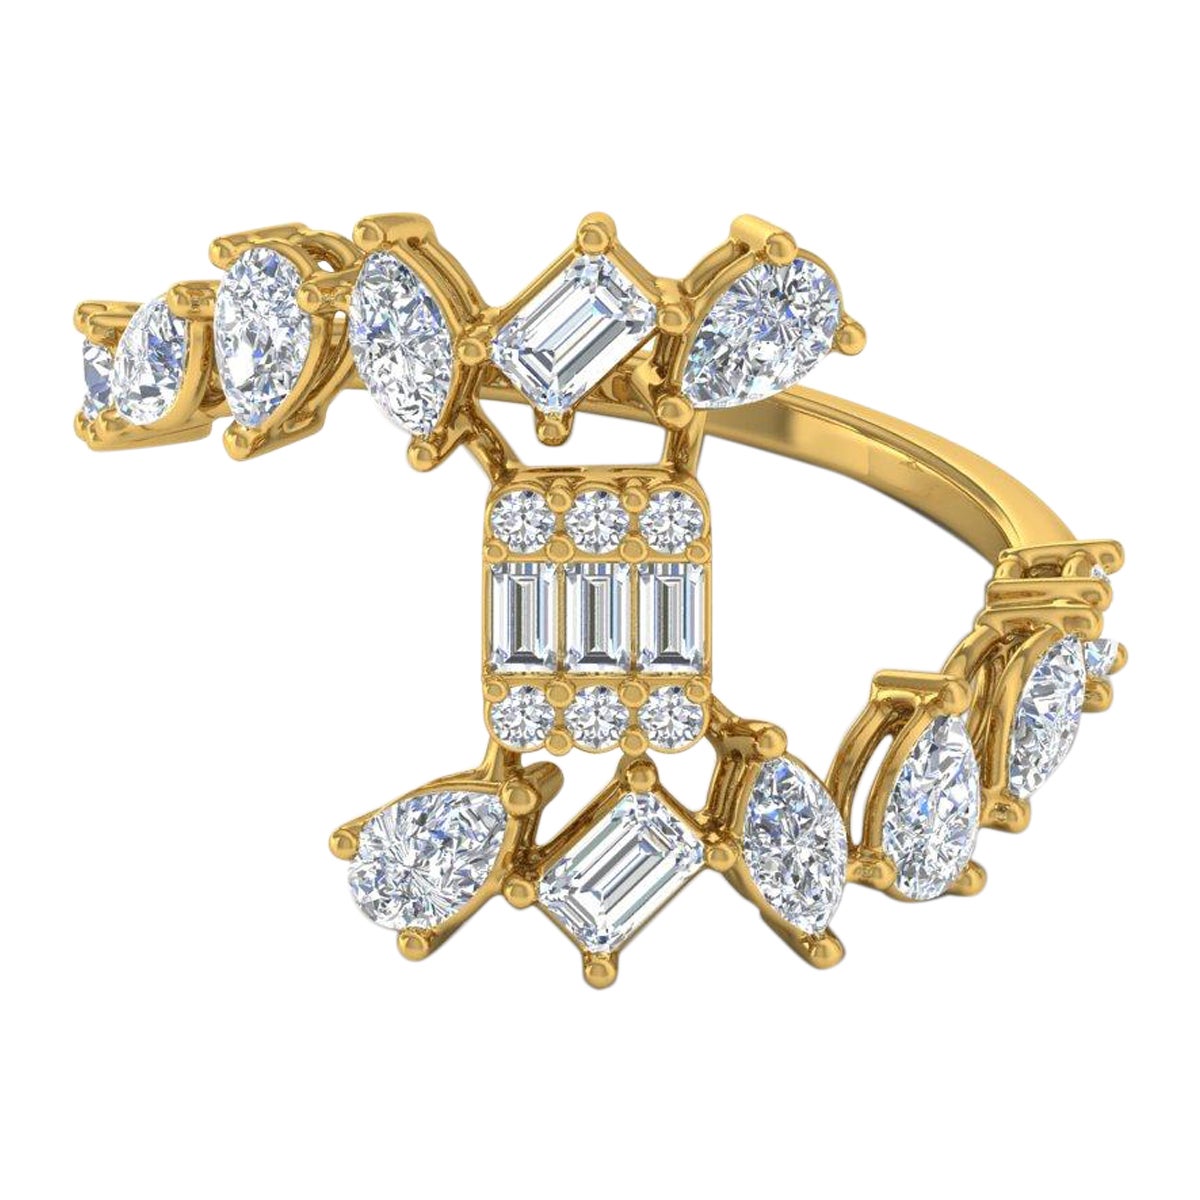 1.6 Carat SI Clarity HI Color Pear Emerald Cut Diamond Ring 18 Karat Yellow Gold